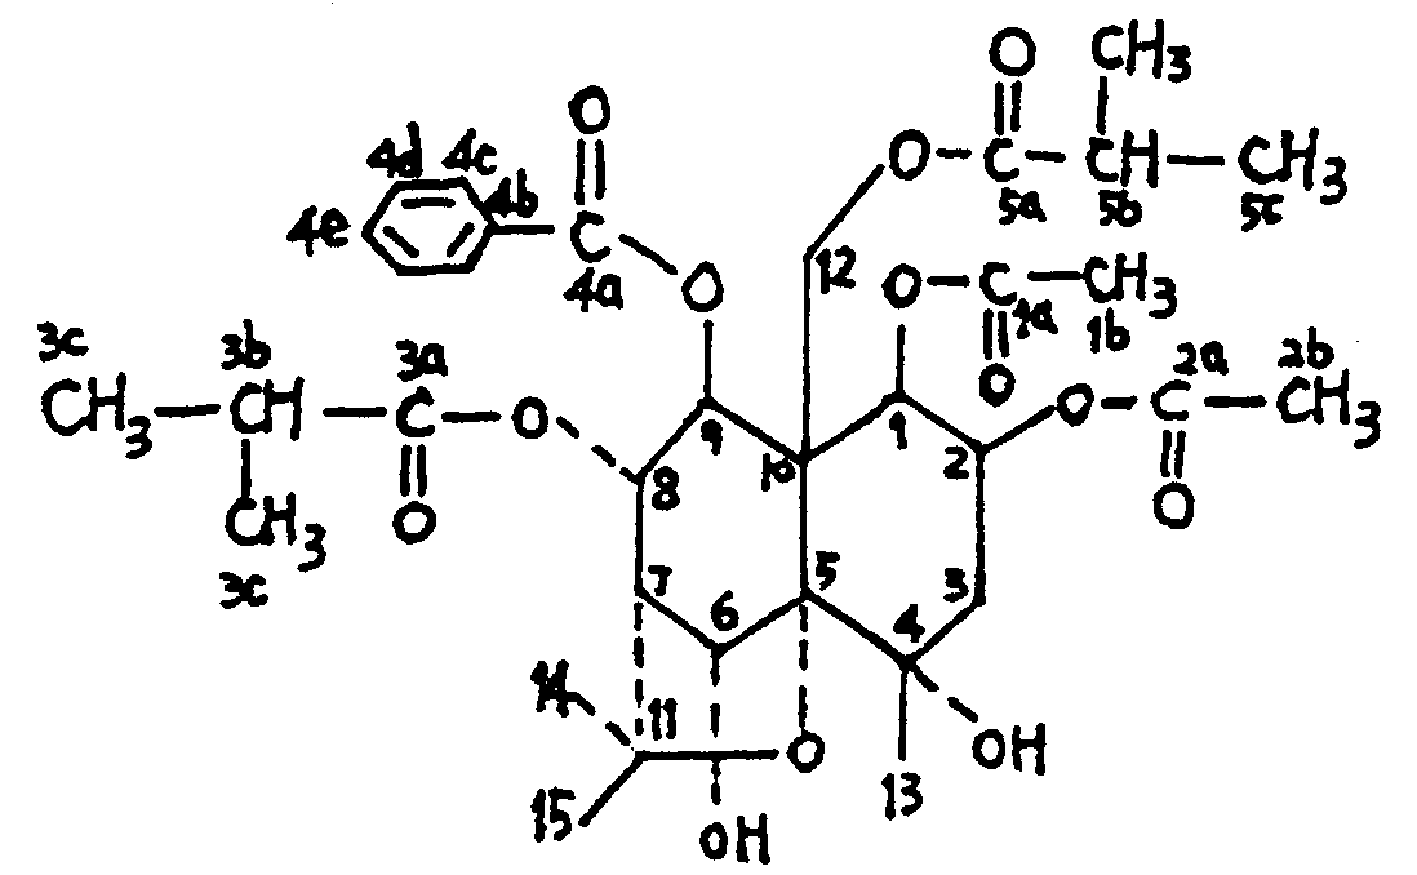 Synthesis of beta-dihydrolignaloefuransesquiter polyalcoholate compounds